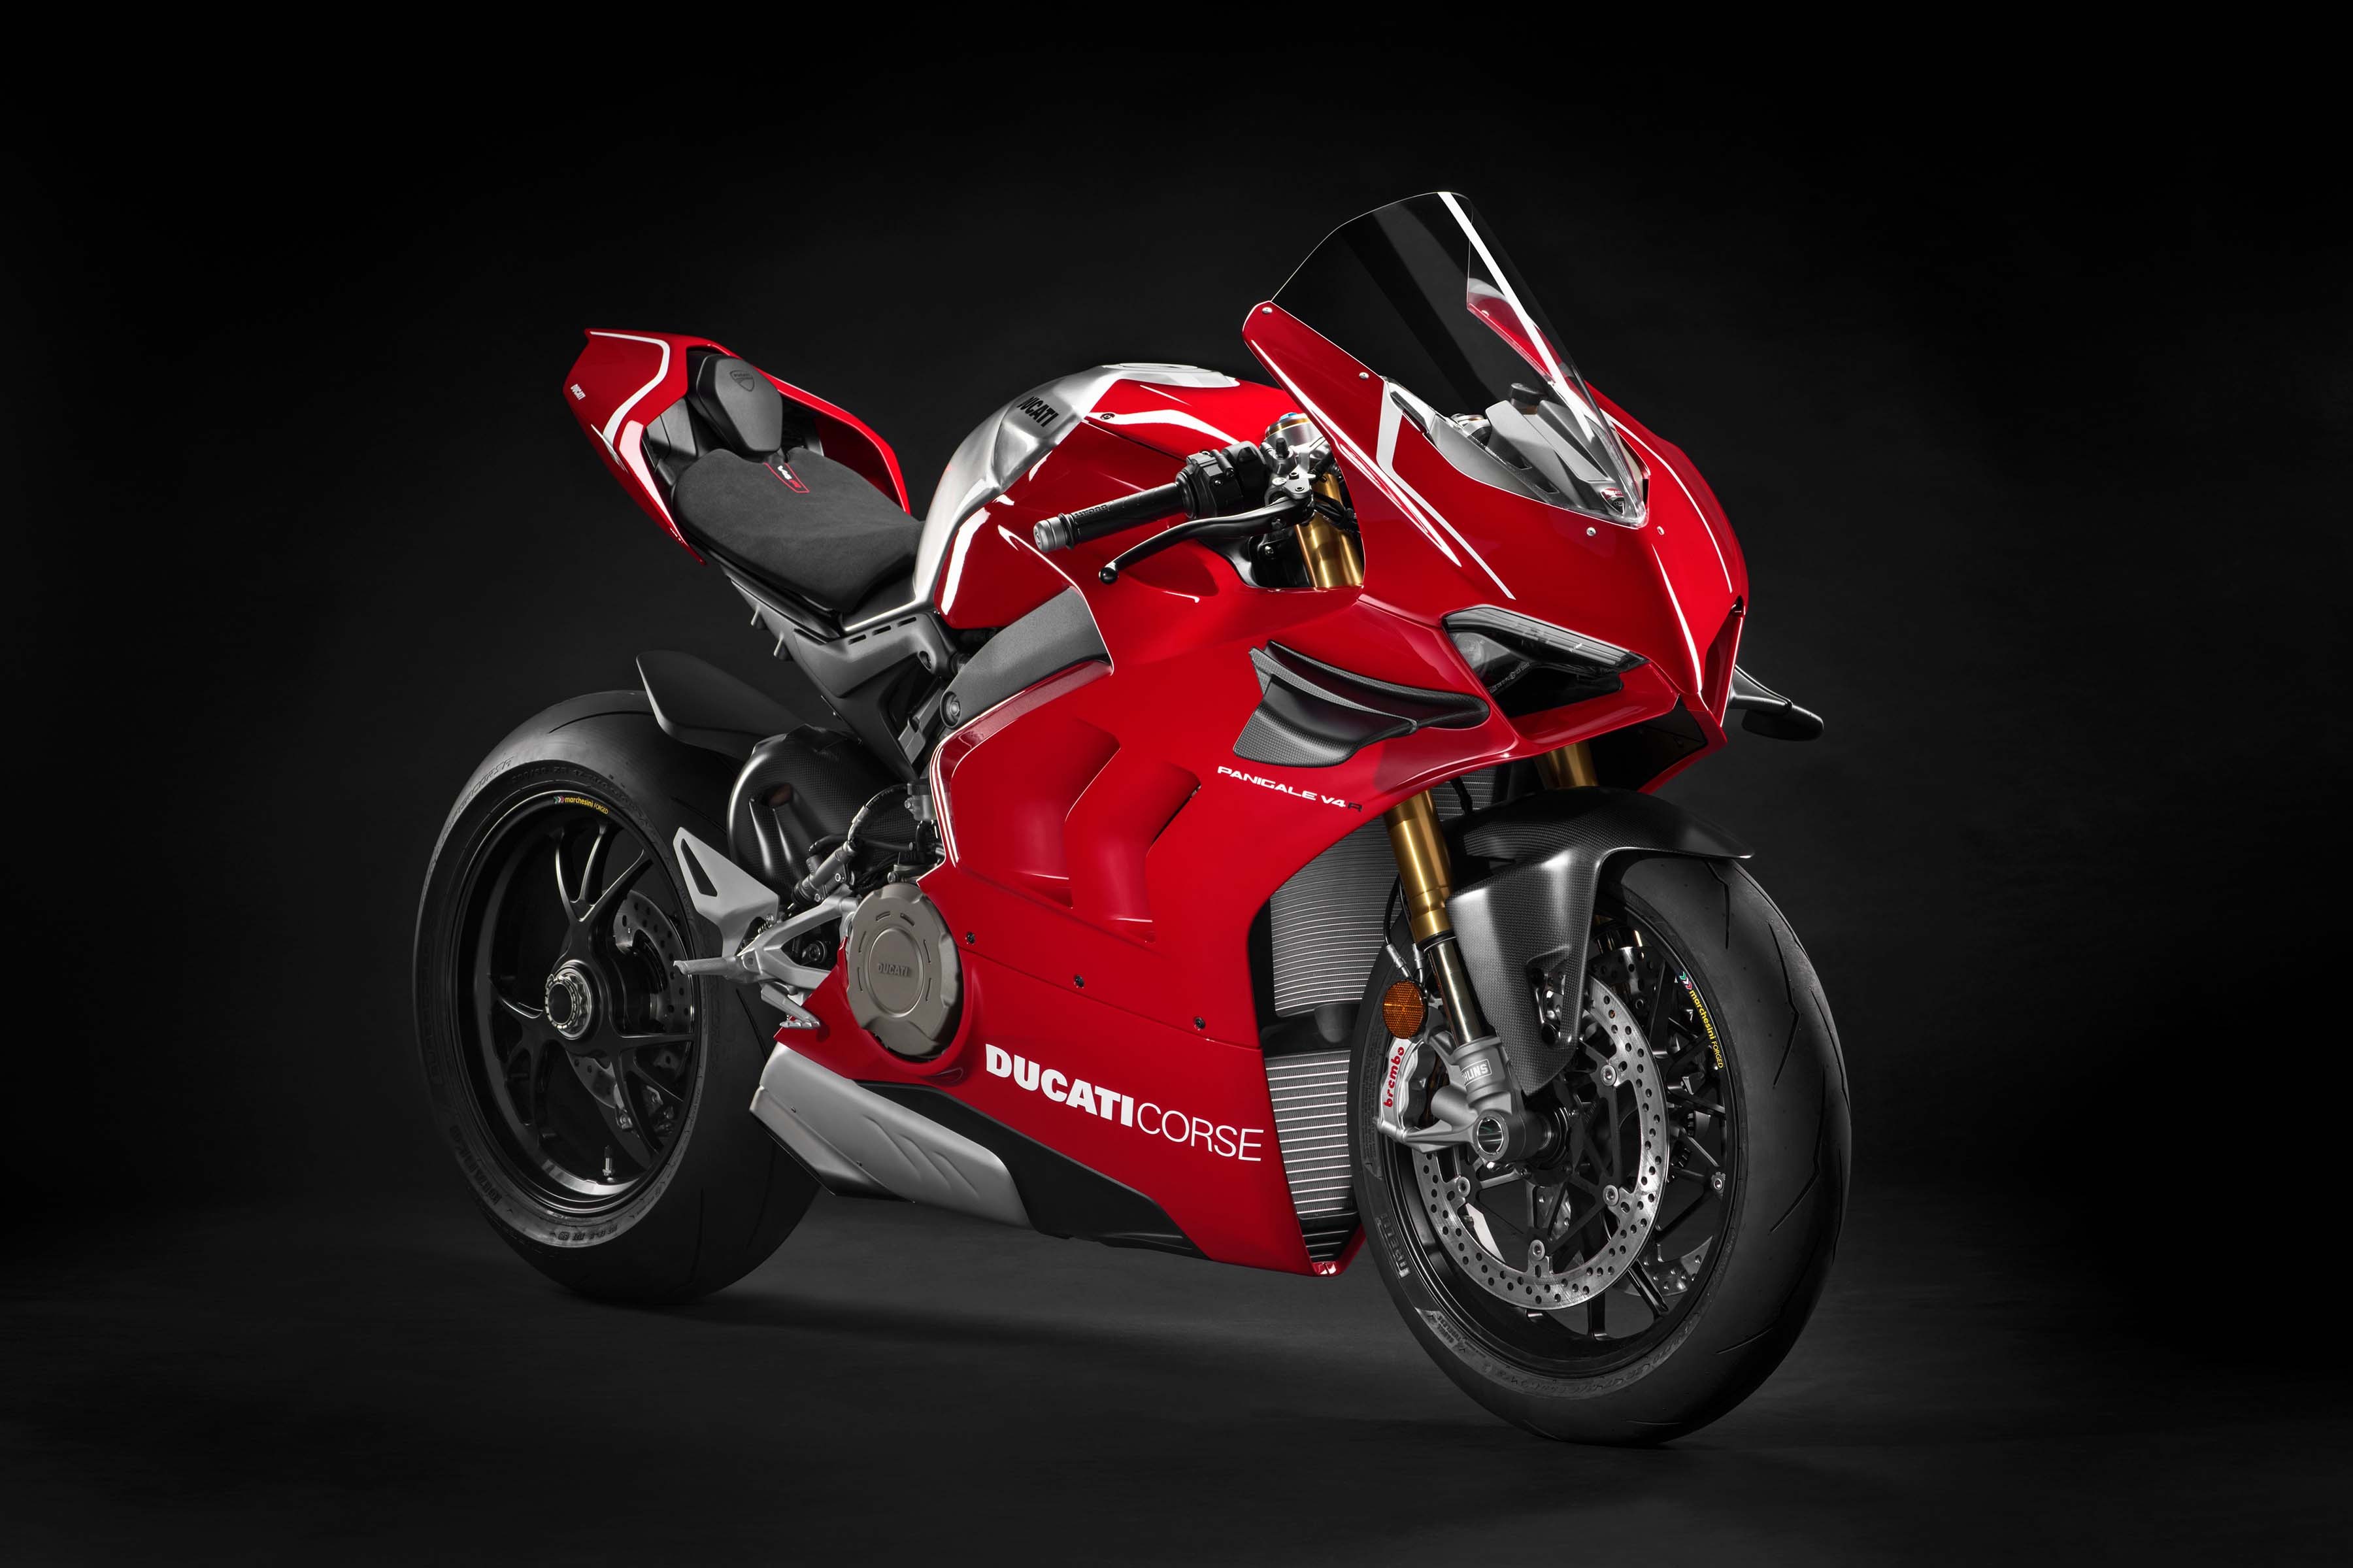 2019 Ducati Panigale V4 R 1